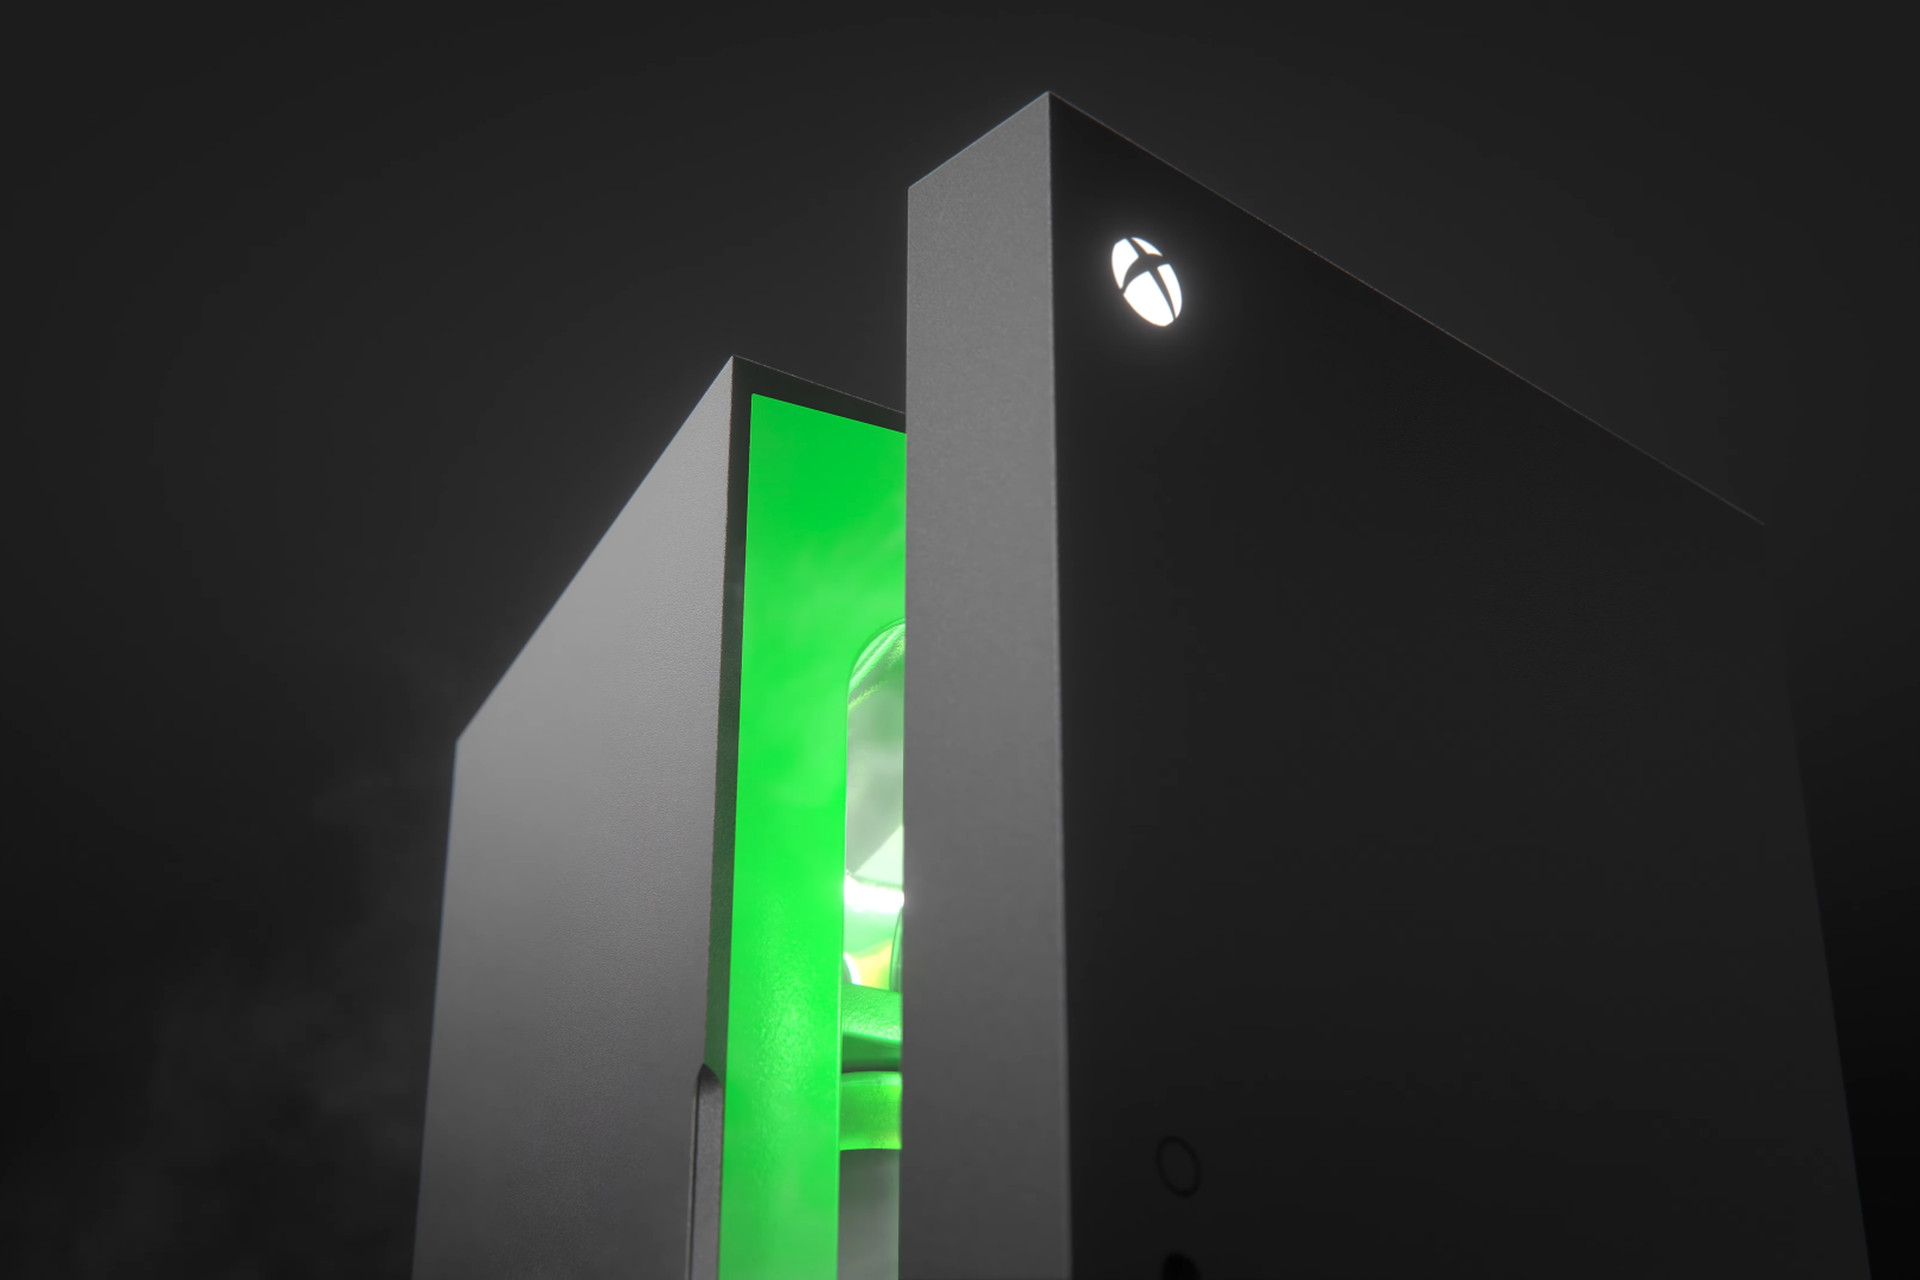 Xbox Series X Mini Fridge Preorders Begin On October 19th For 9999